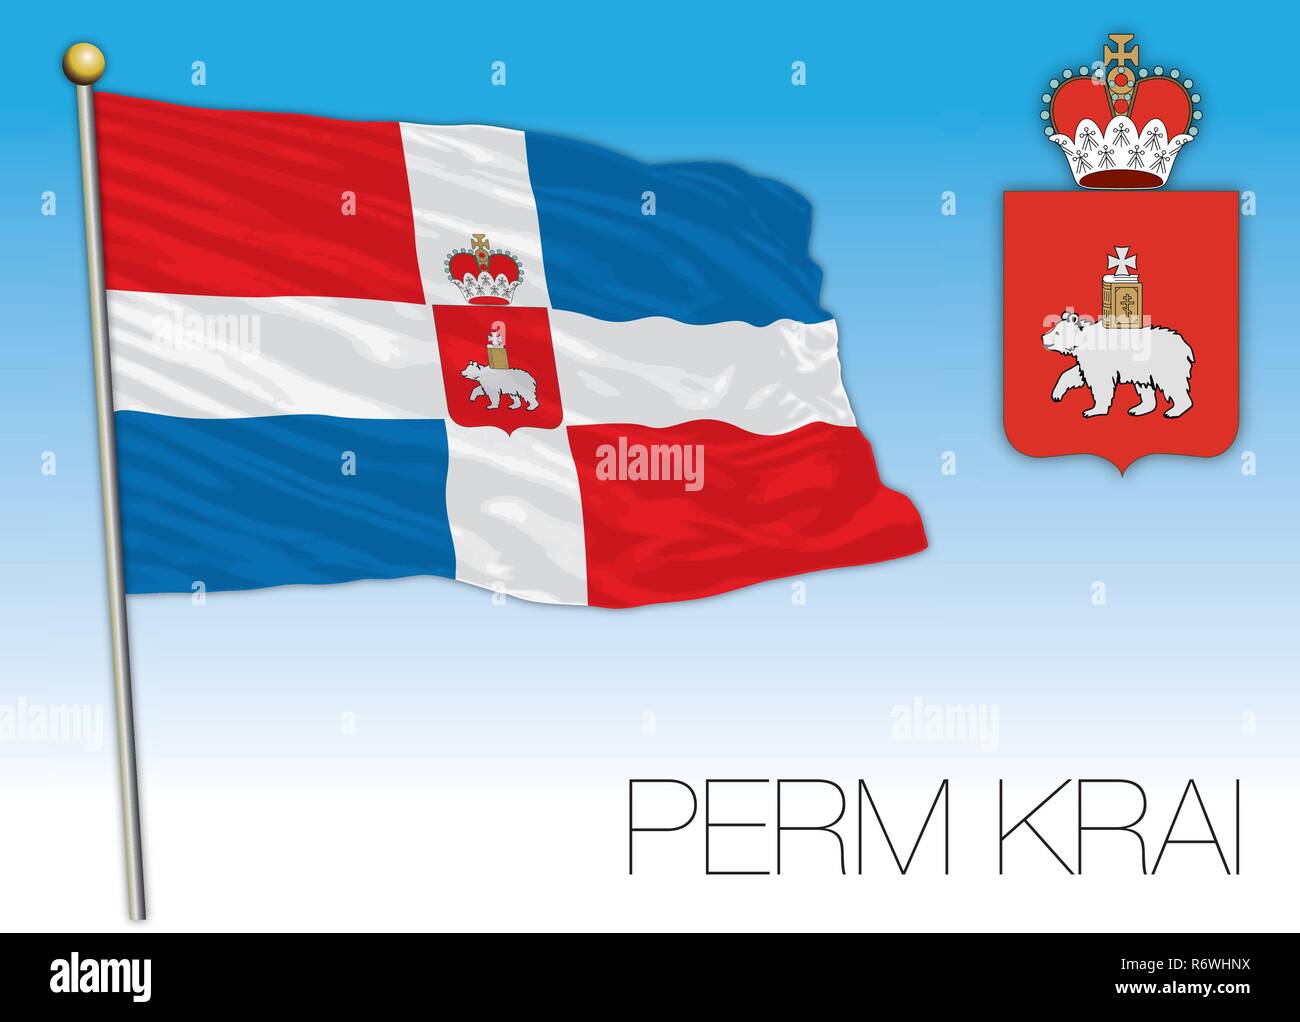 Perm Krai flag, Russian Federation, vector illustration Stock Vector